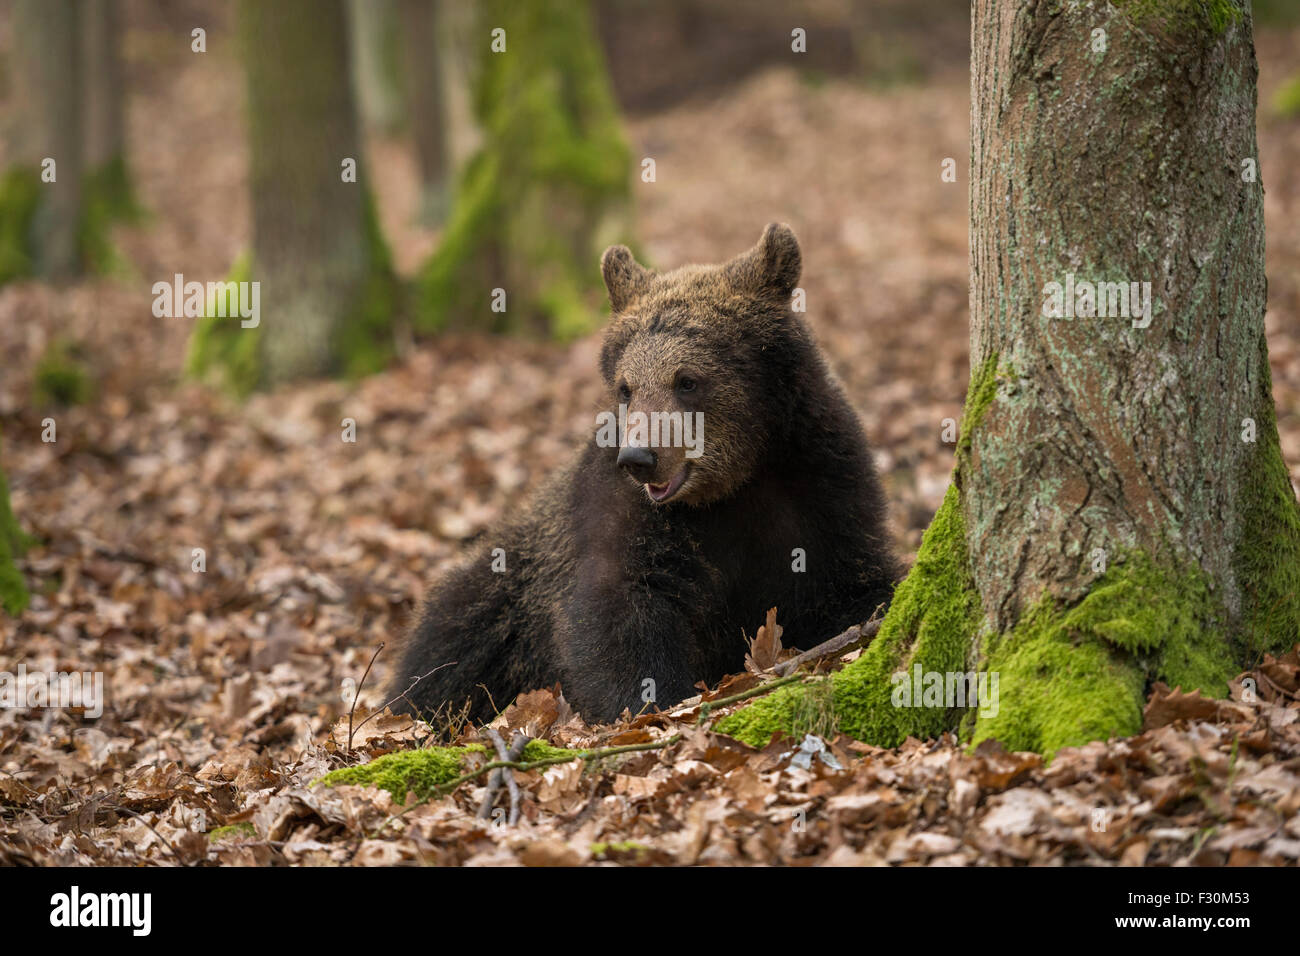 Europeo attento orso bruno / Europäischer Braunbaer ( Ursus arctos ) riposa accanto a un albero in un autunno di latifoglie foresta. Foto Stock